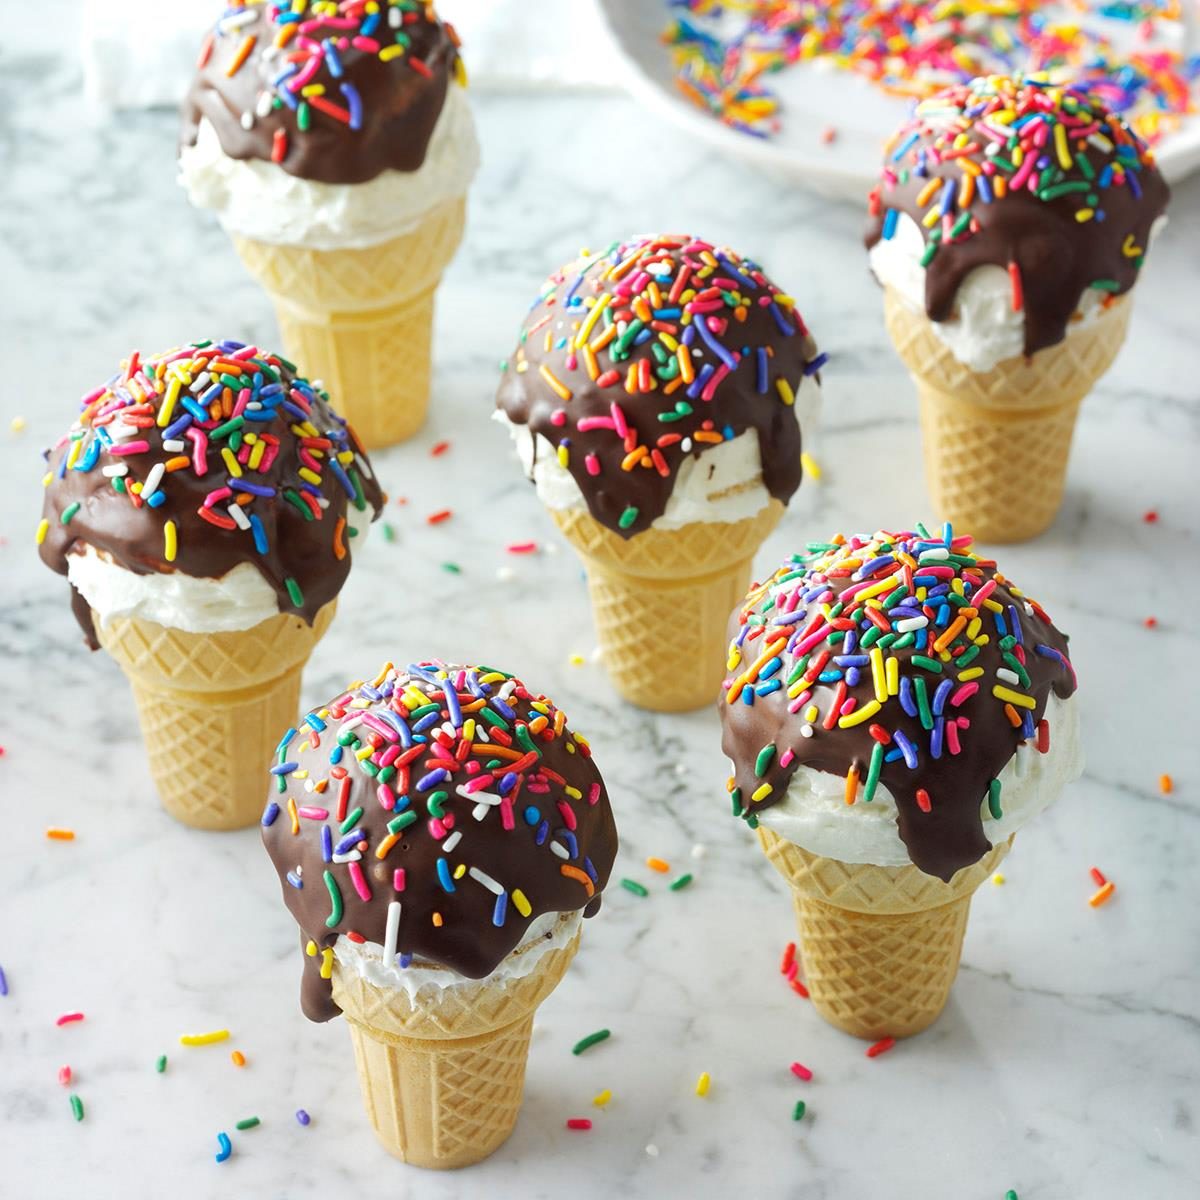 Chocolate-Dipped Ice Cream Cone Cupcakes